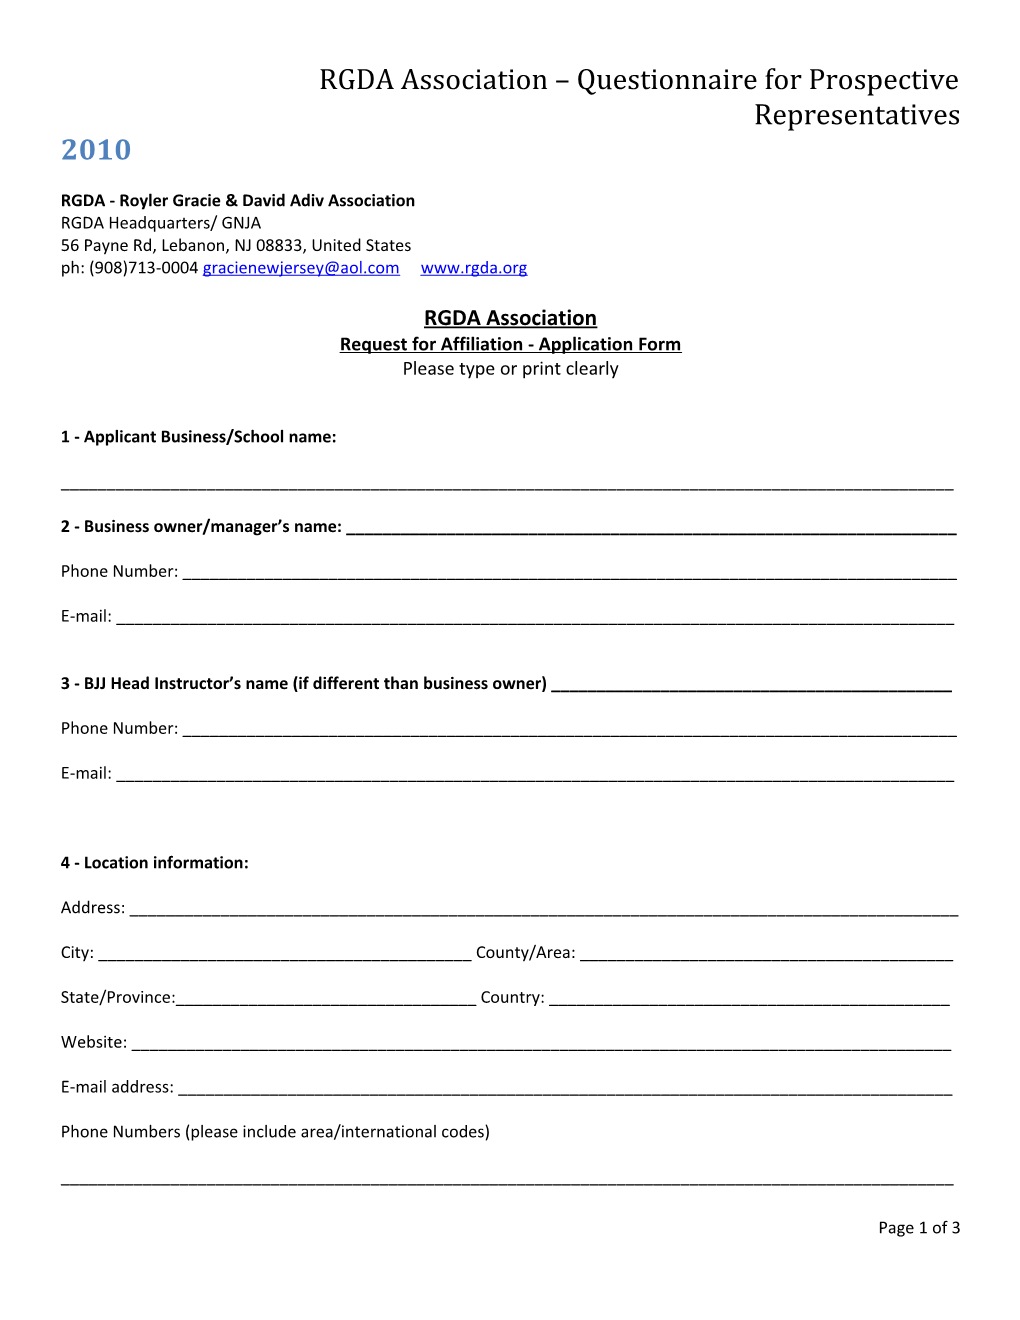 RGDA Association Questionnaire for Prospective Representatives